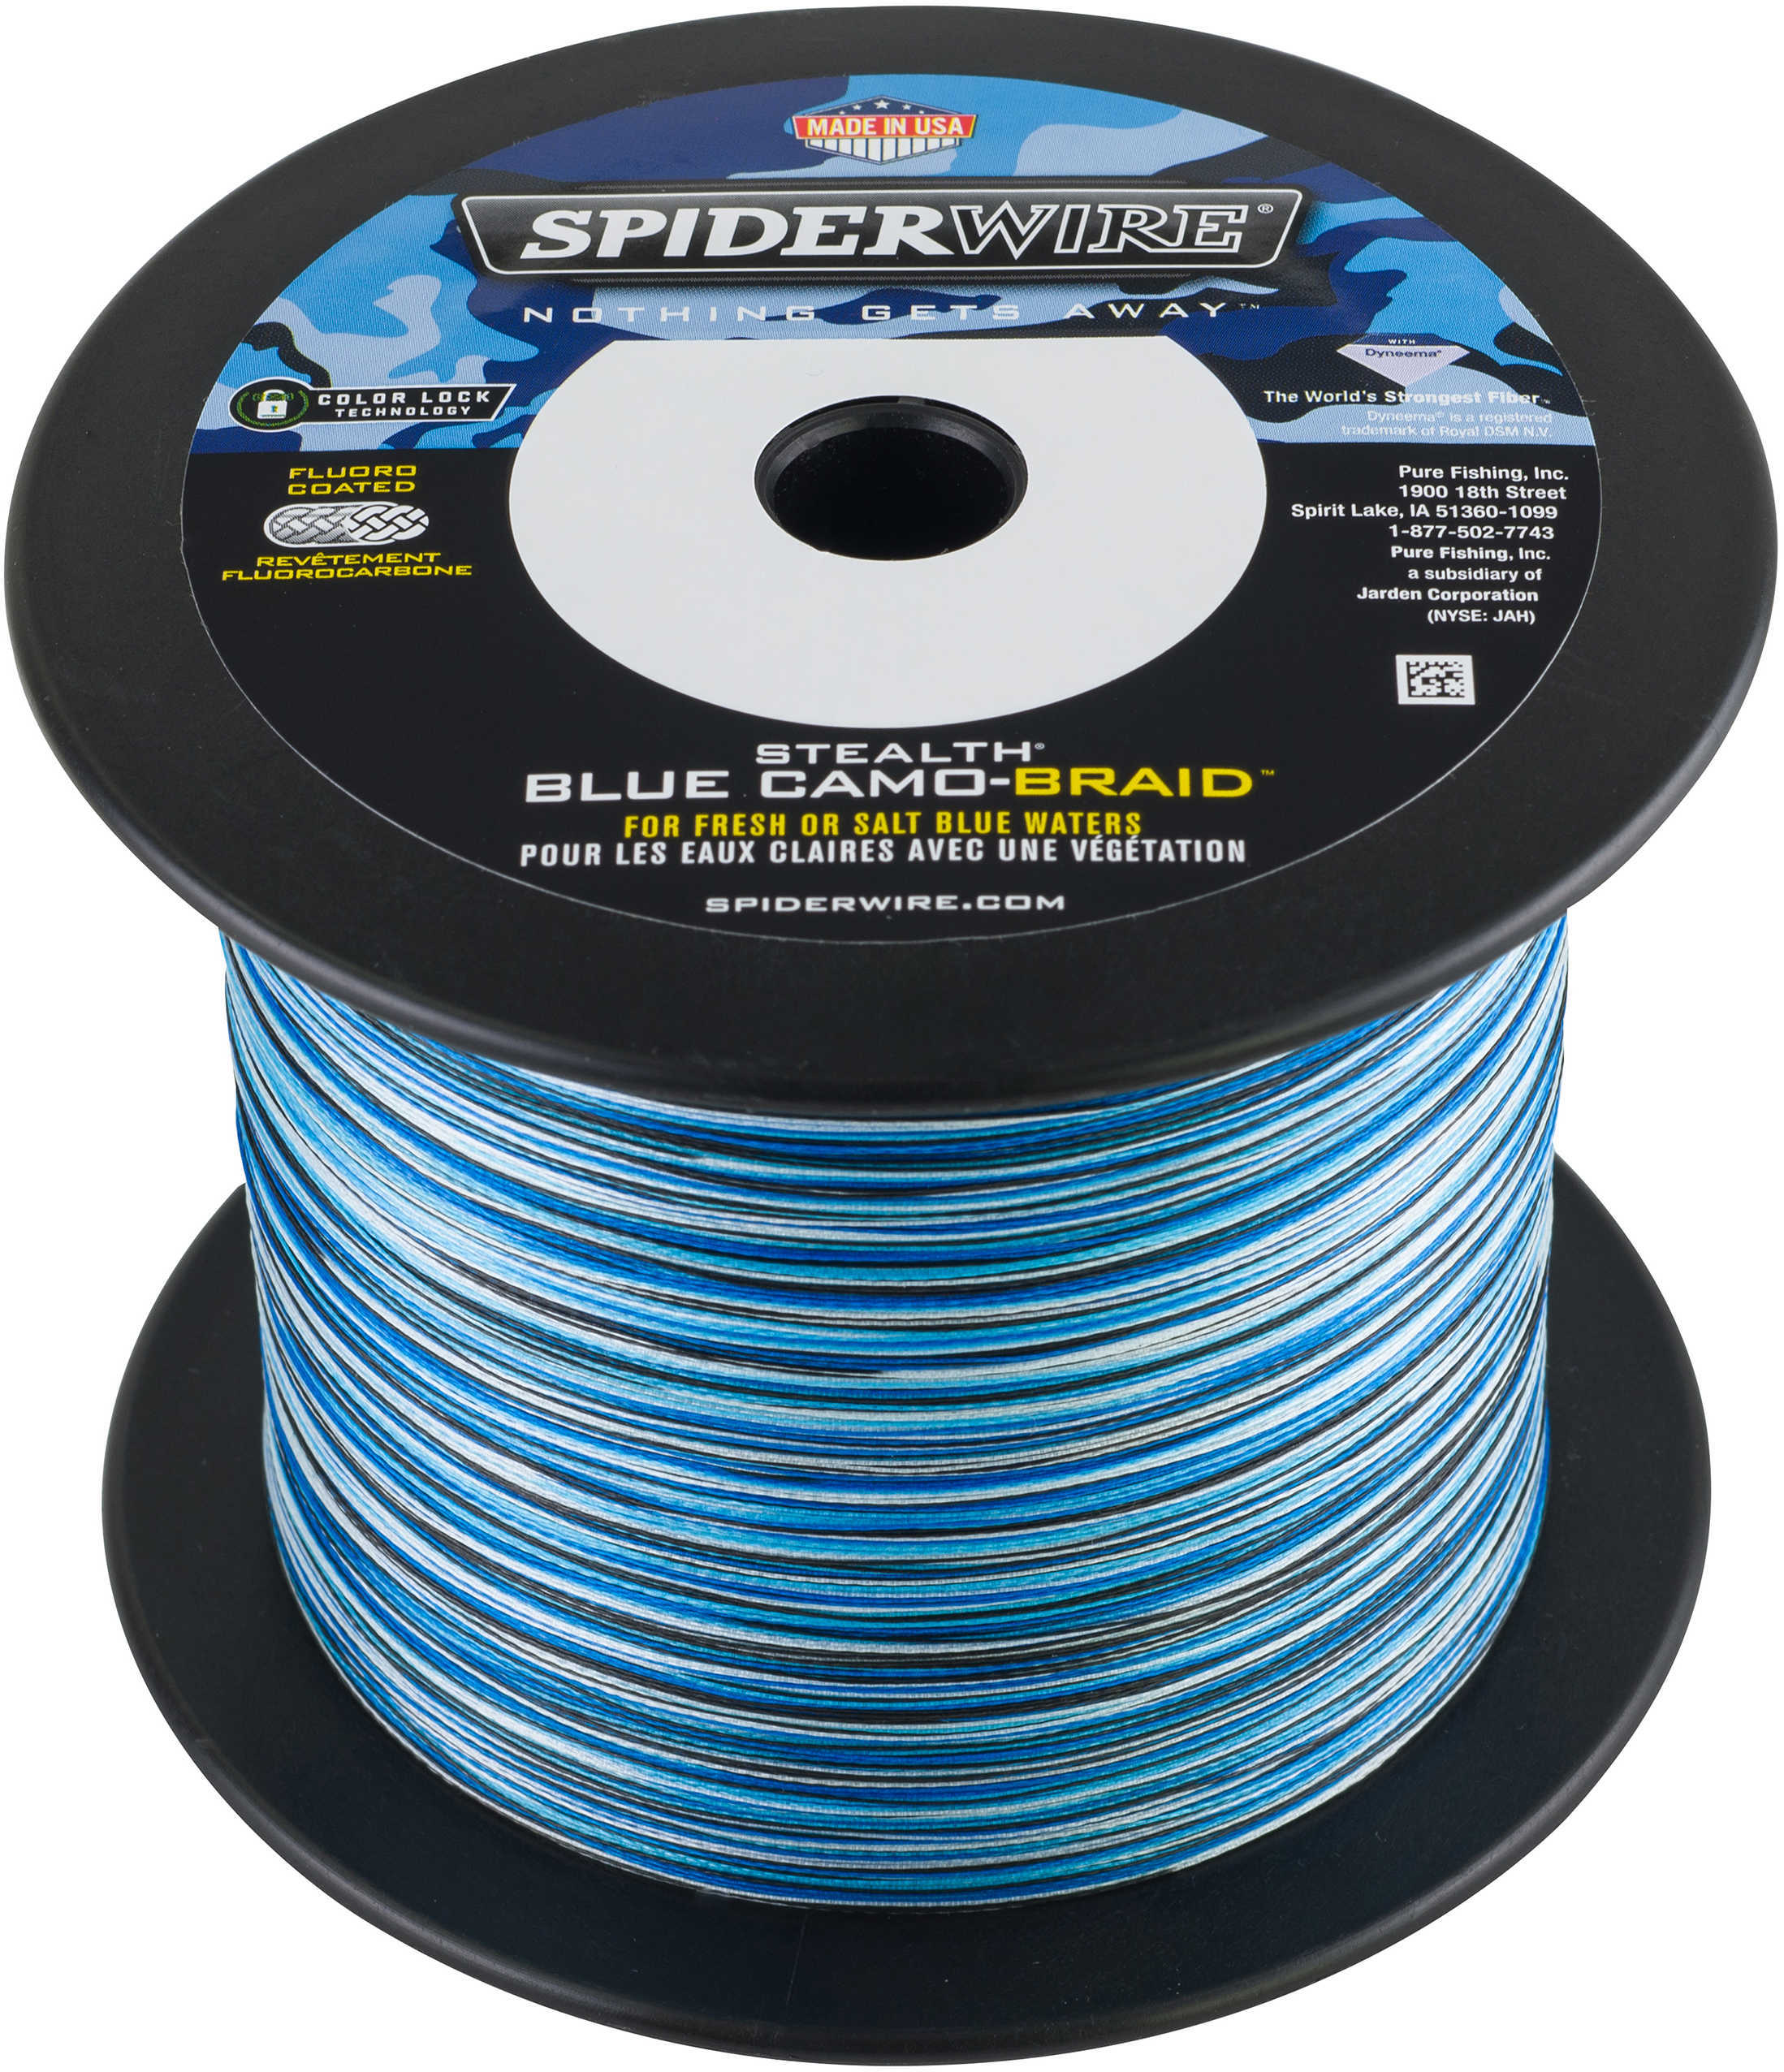 Spiderwire Stealth Braid 3000 Yards , 65 lbs Strength, 0.015" Diameter, Blue Camo Md: 1370468